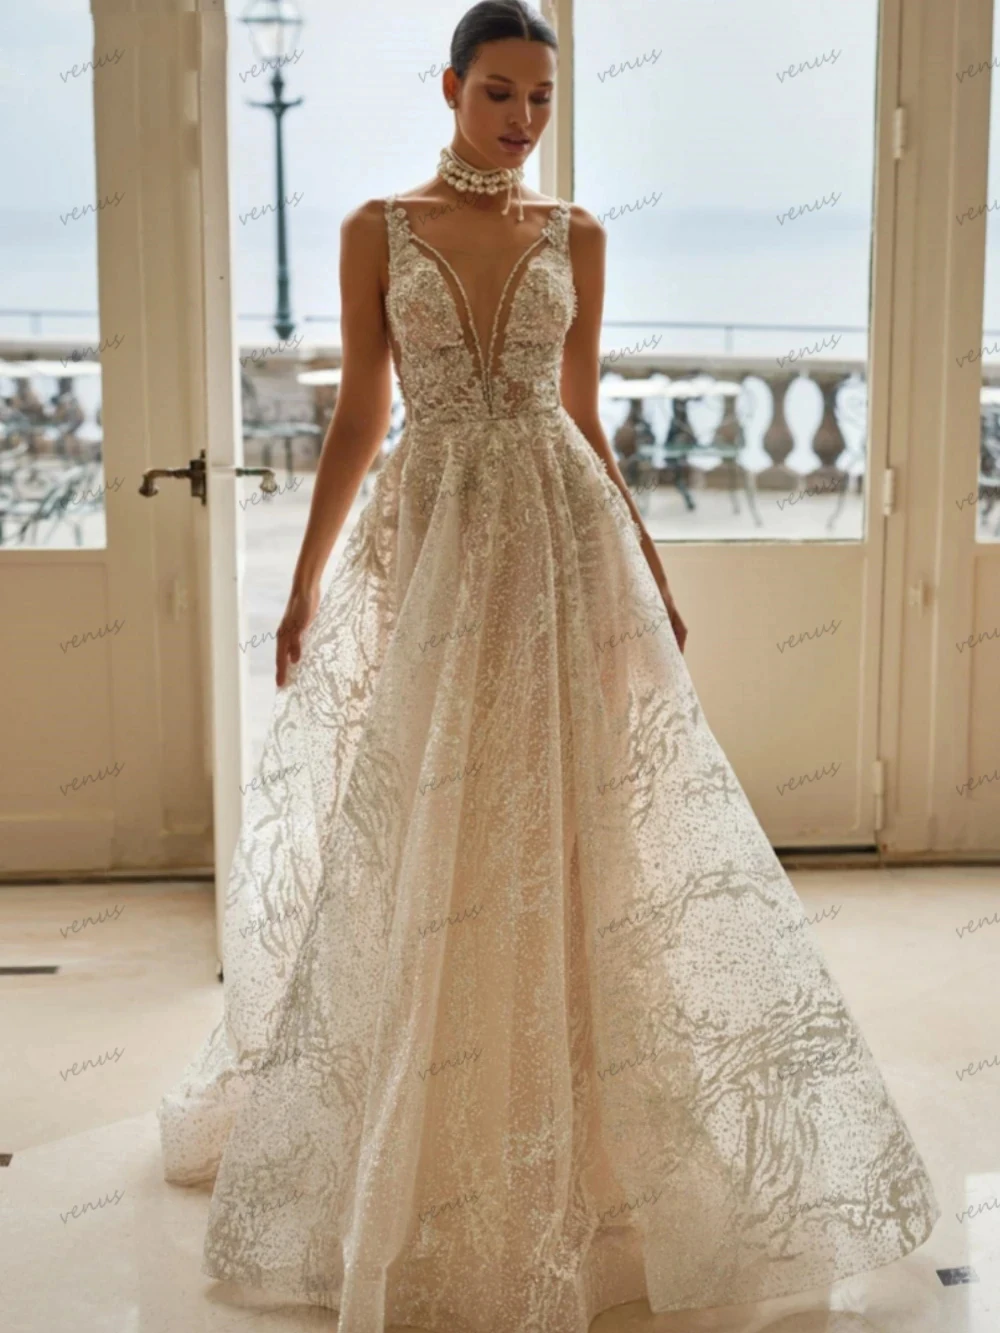 

Illusion Lace Wedding Dresses A-Line Deep V-Neck Bridal Gowns Appliques Sleeveless Backless Robes For Brides Vestidos De Novia